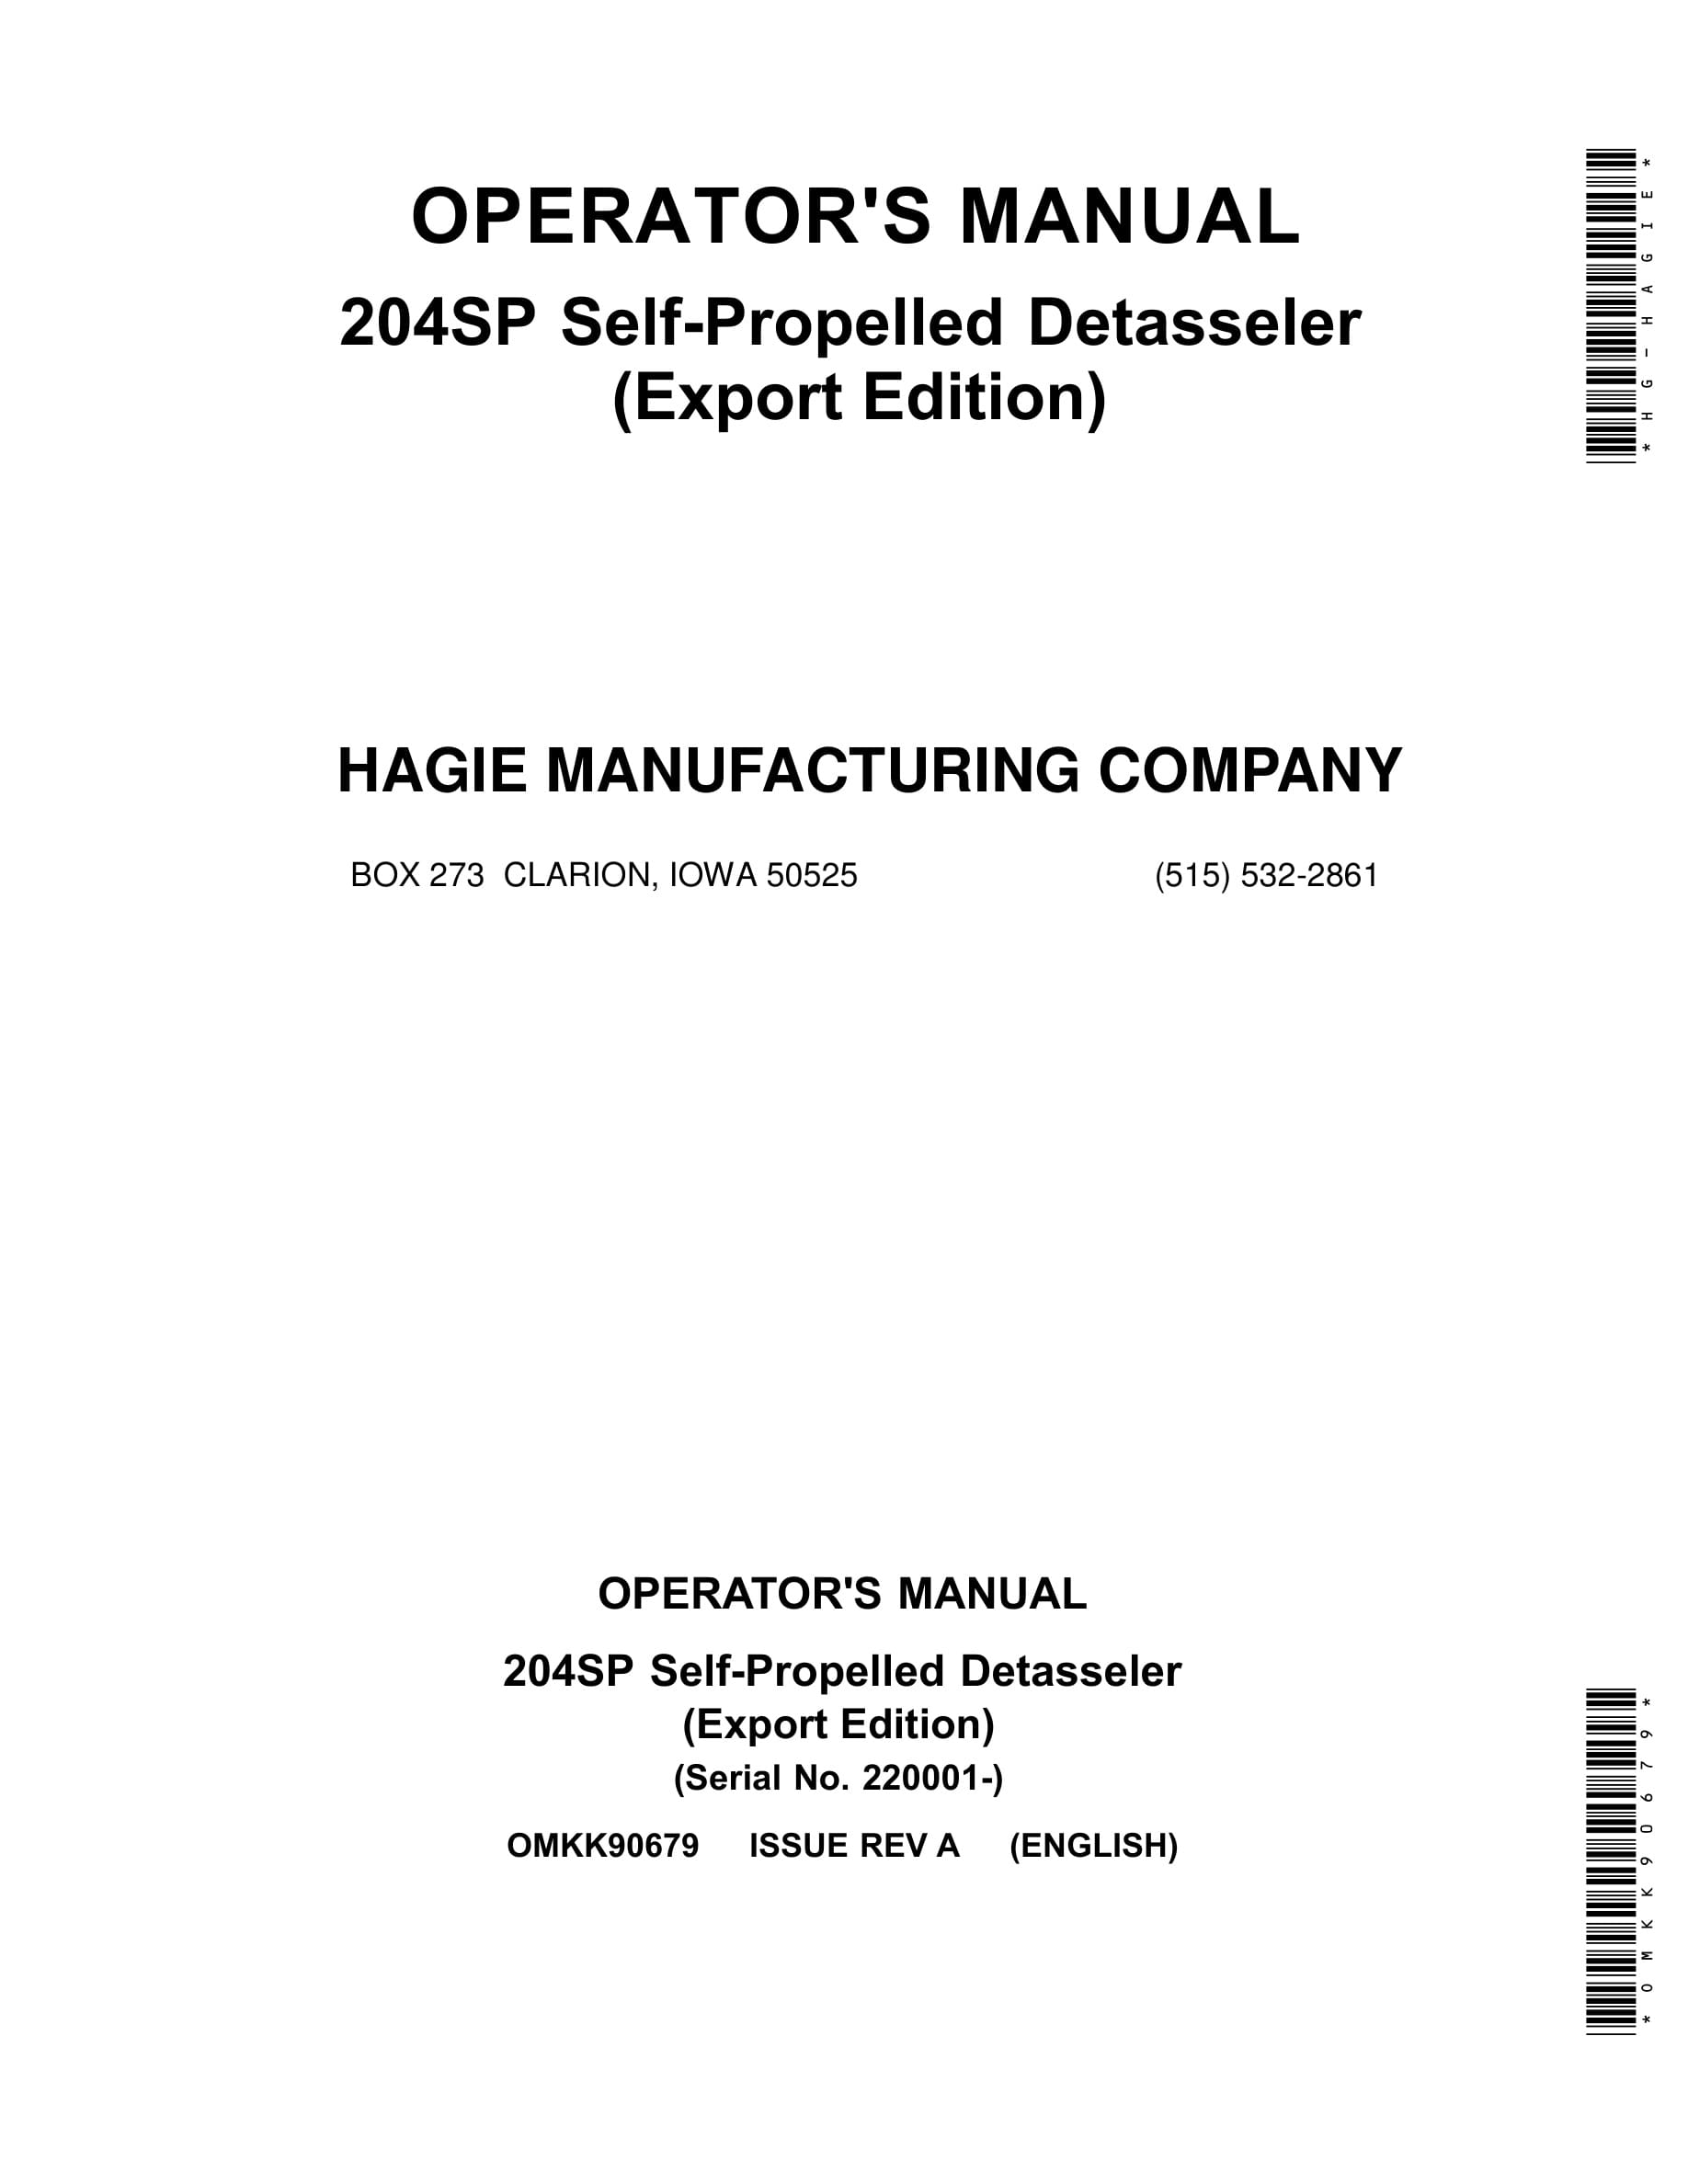 John Deere 204SP Self-Propelled Detasseler Operator Manual OMKK90679-1